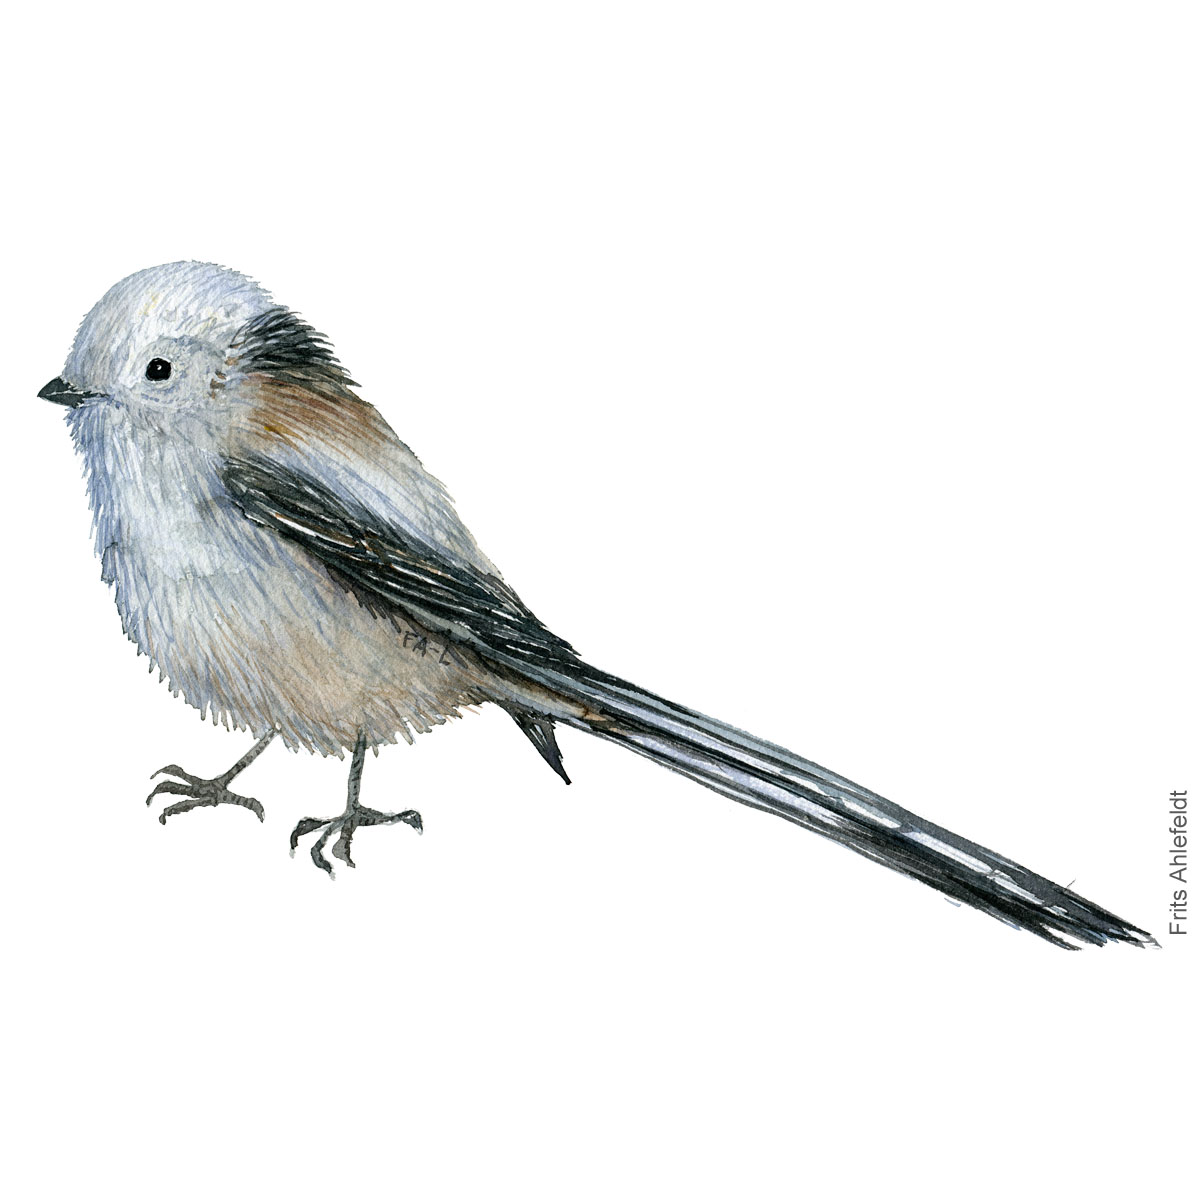 Halemejse - Long tailed tit - Bird watercolor painting. Artwork by Frits Ahlefeldt. Fugle akvarel